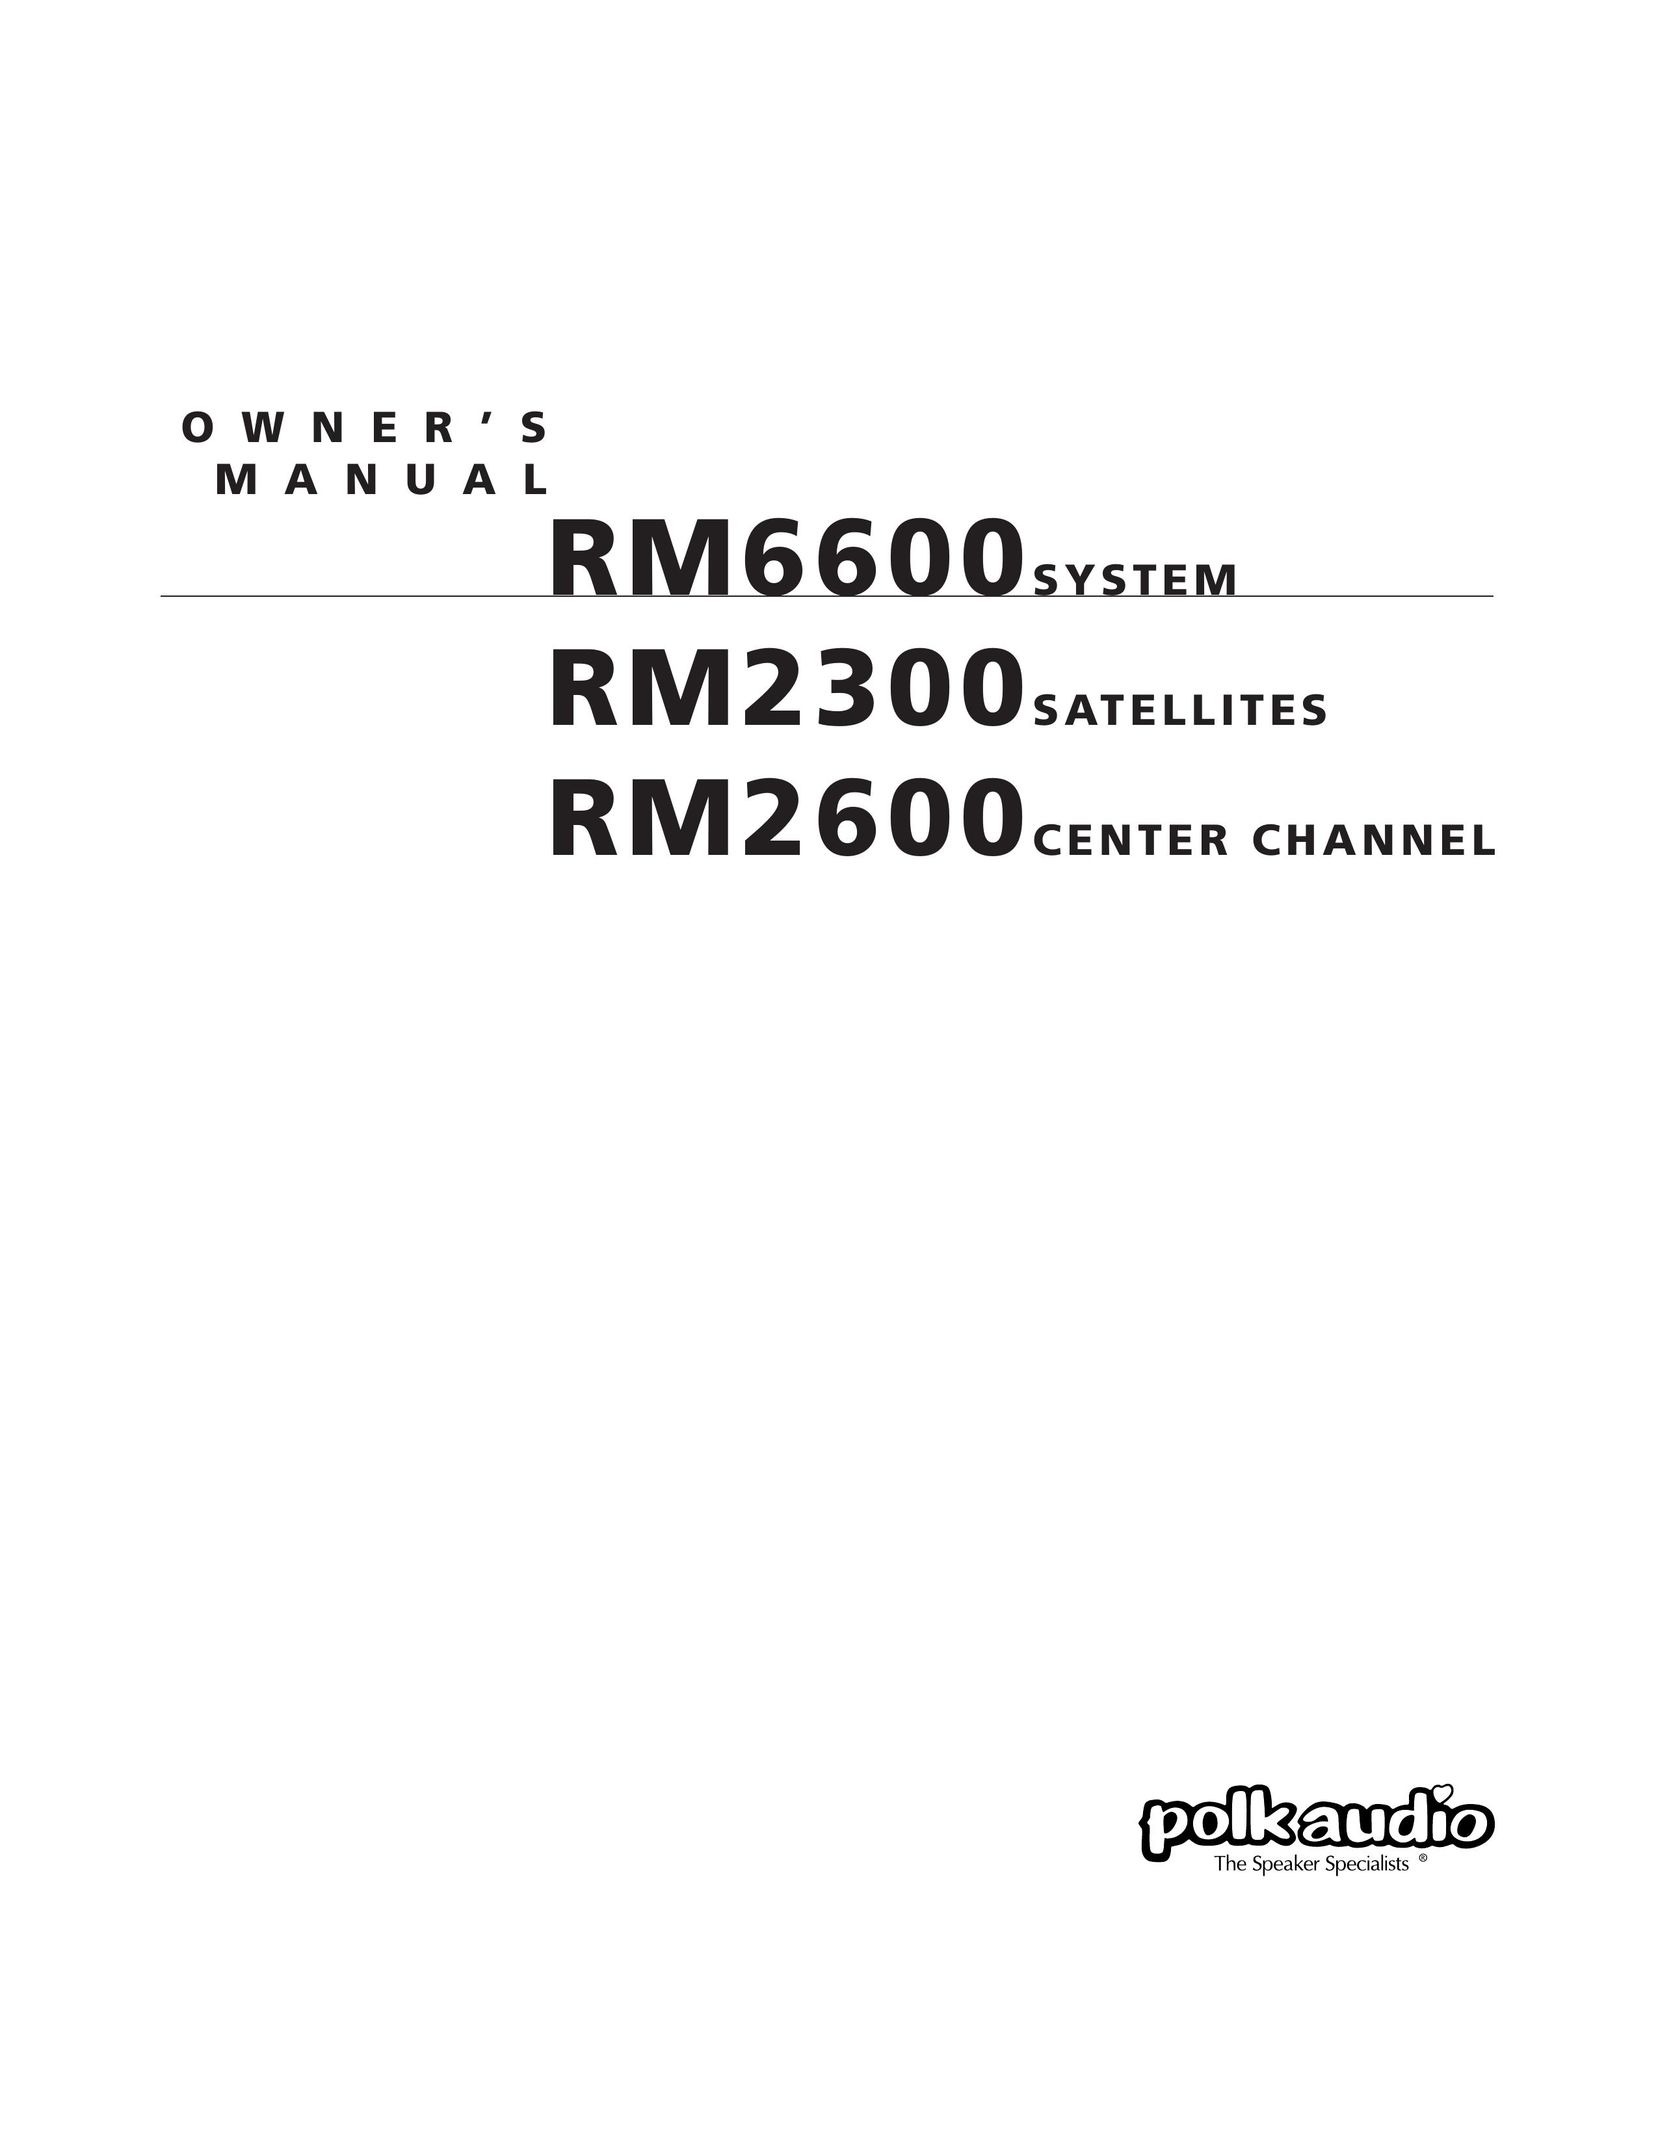 Polk Audio RM2600 TV Antenna User Manual